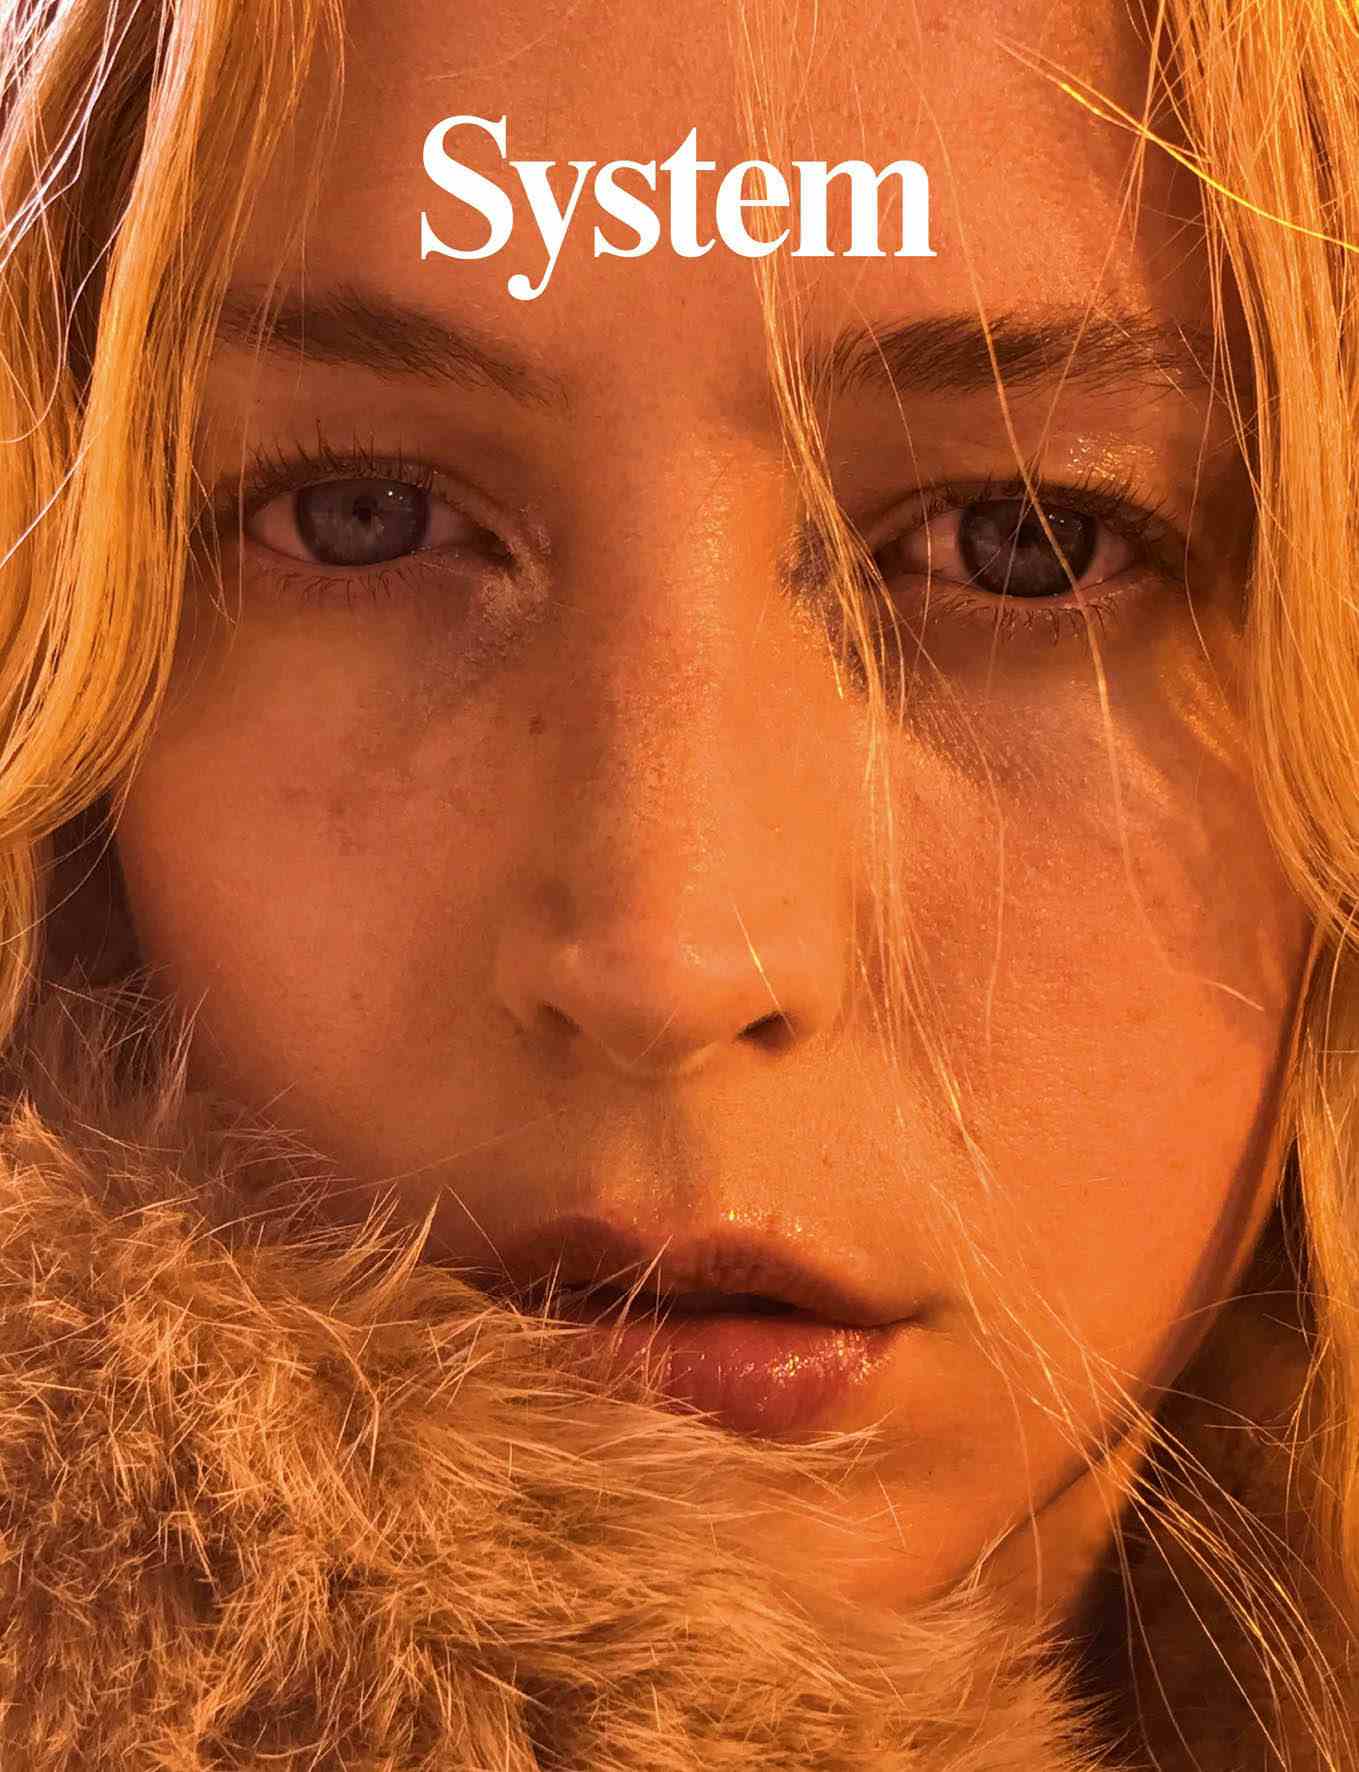 SYSTEM - April 2017
Photographer: Juergen Teller
Model: Raquel Zimmerman
Stylist: Alexia Niedzielski
Location: Canada